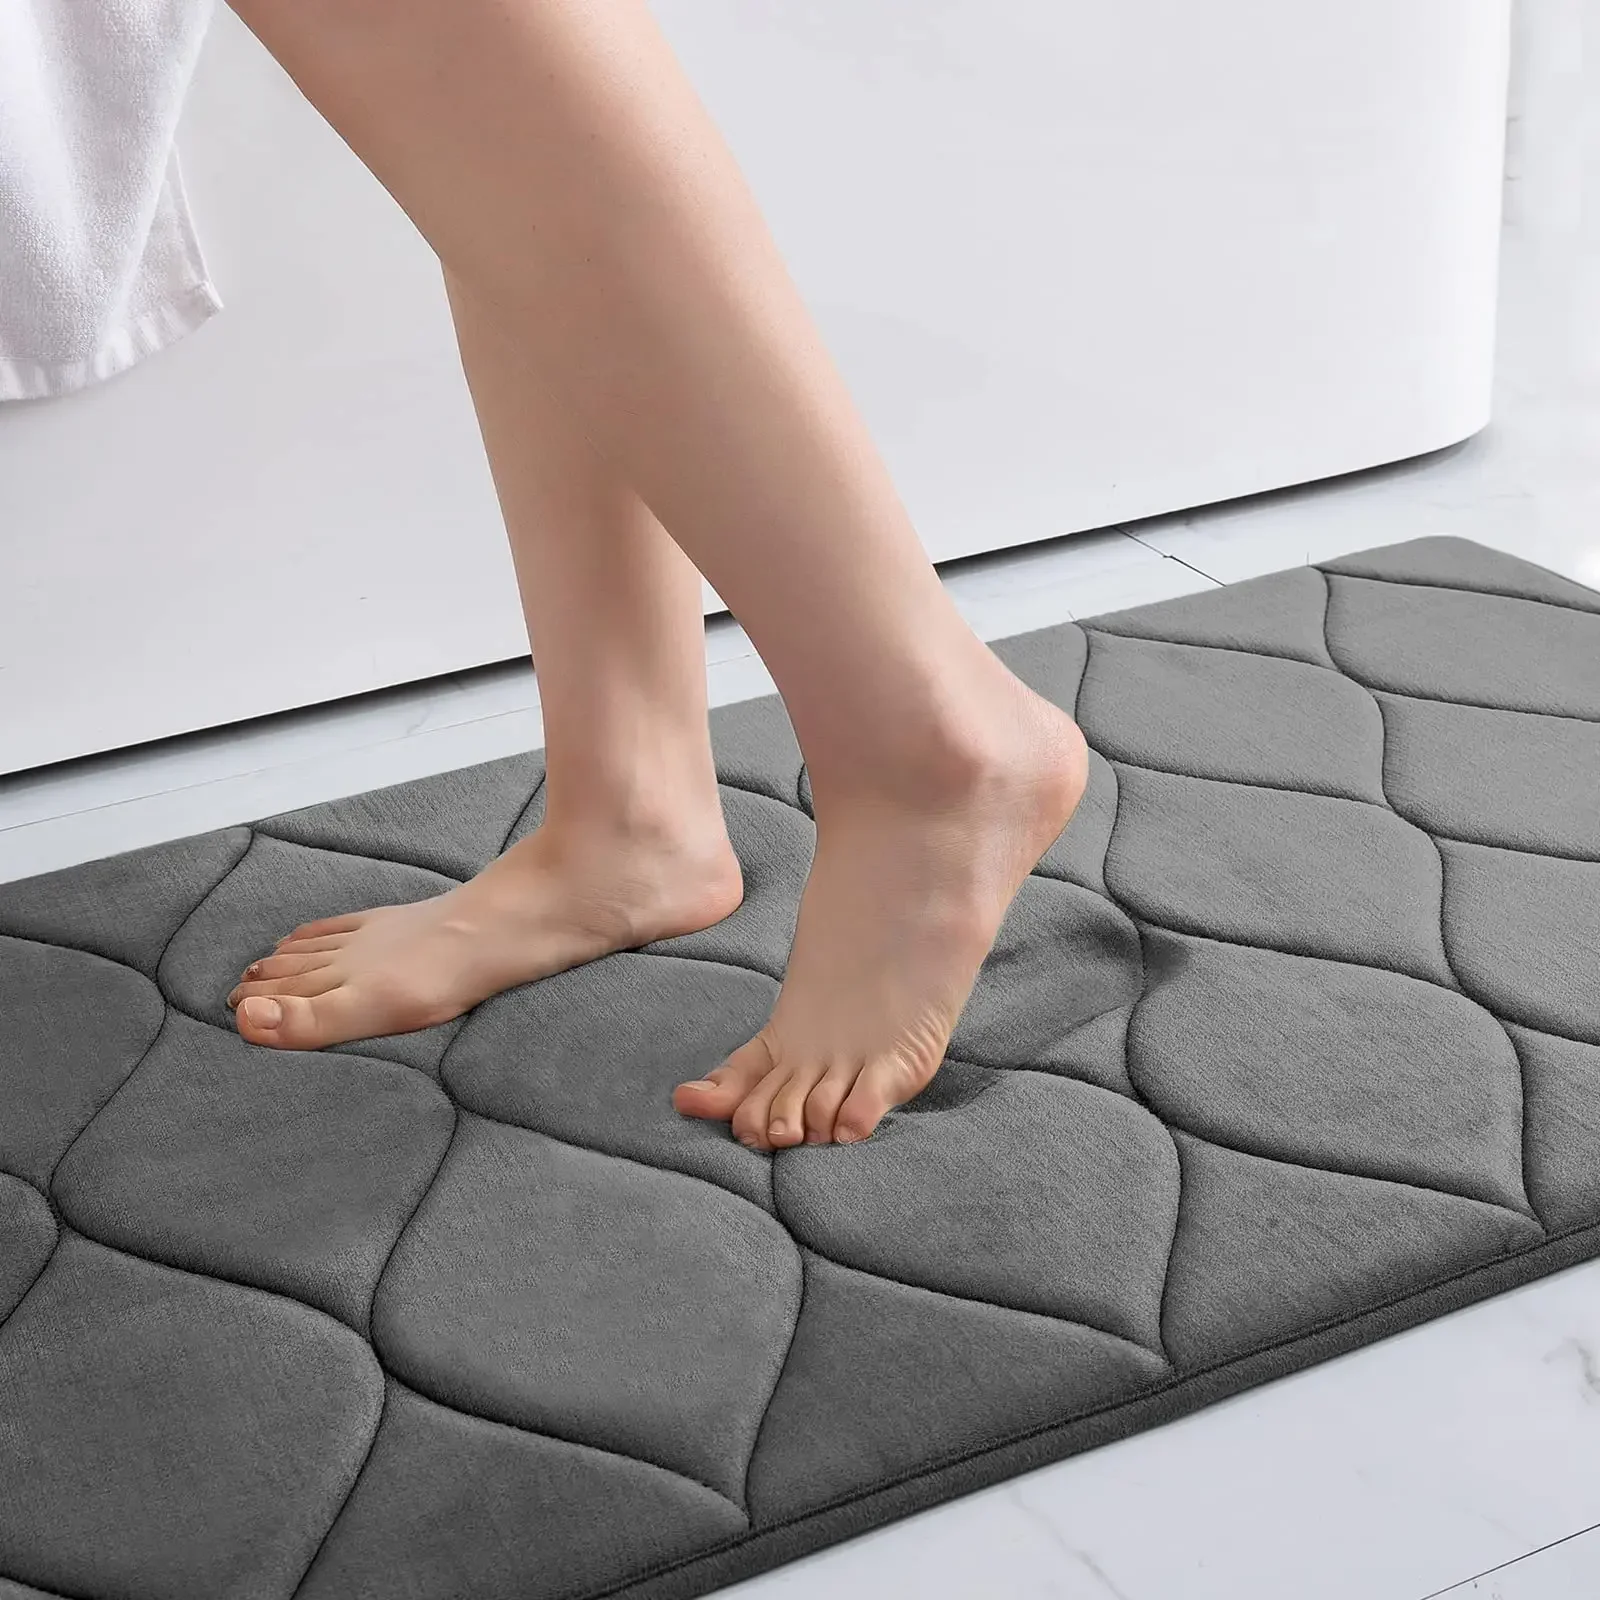 

Olanly Absorbent Bathroom Rug Thick Non-Slip Shower Carpet Machine Washable Floor Pads Home Decoration Soft Memory Foam Bath Mat